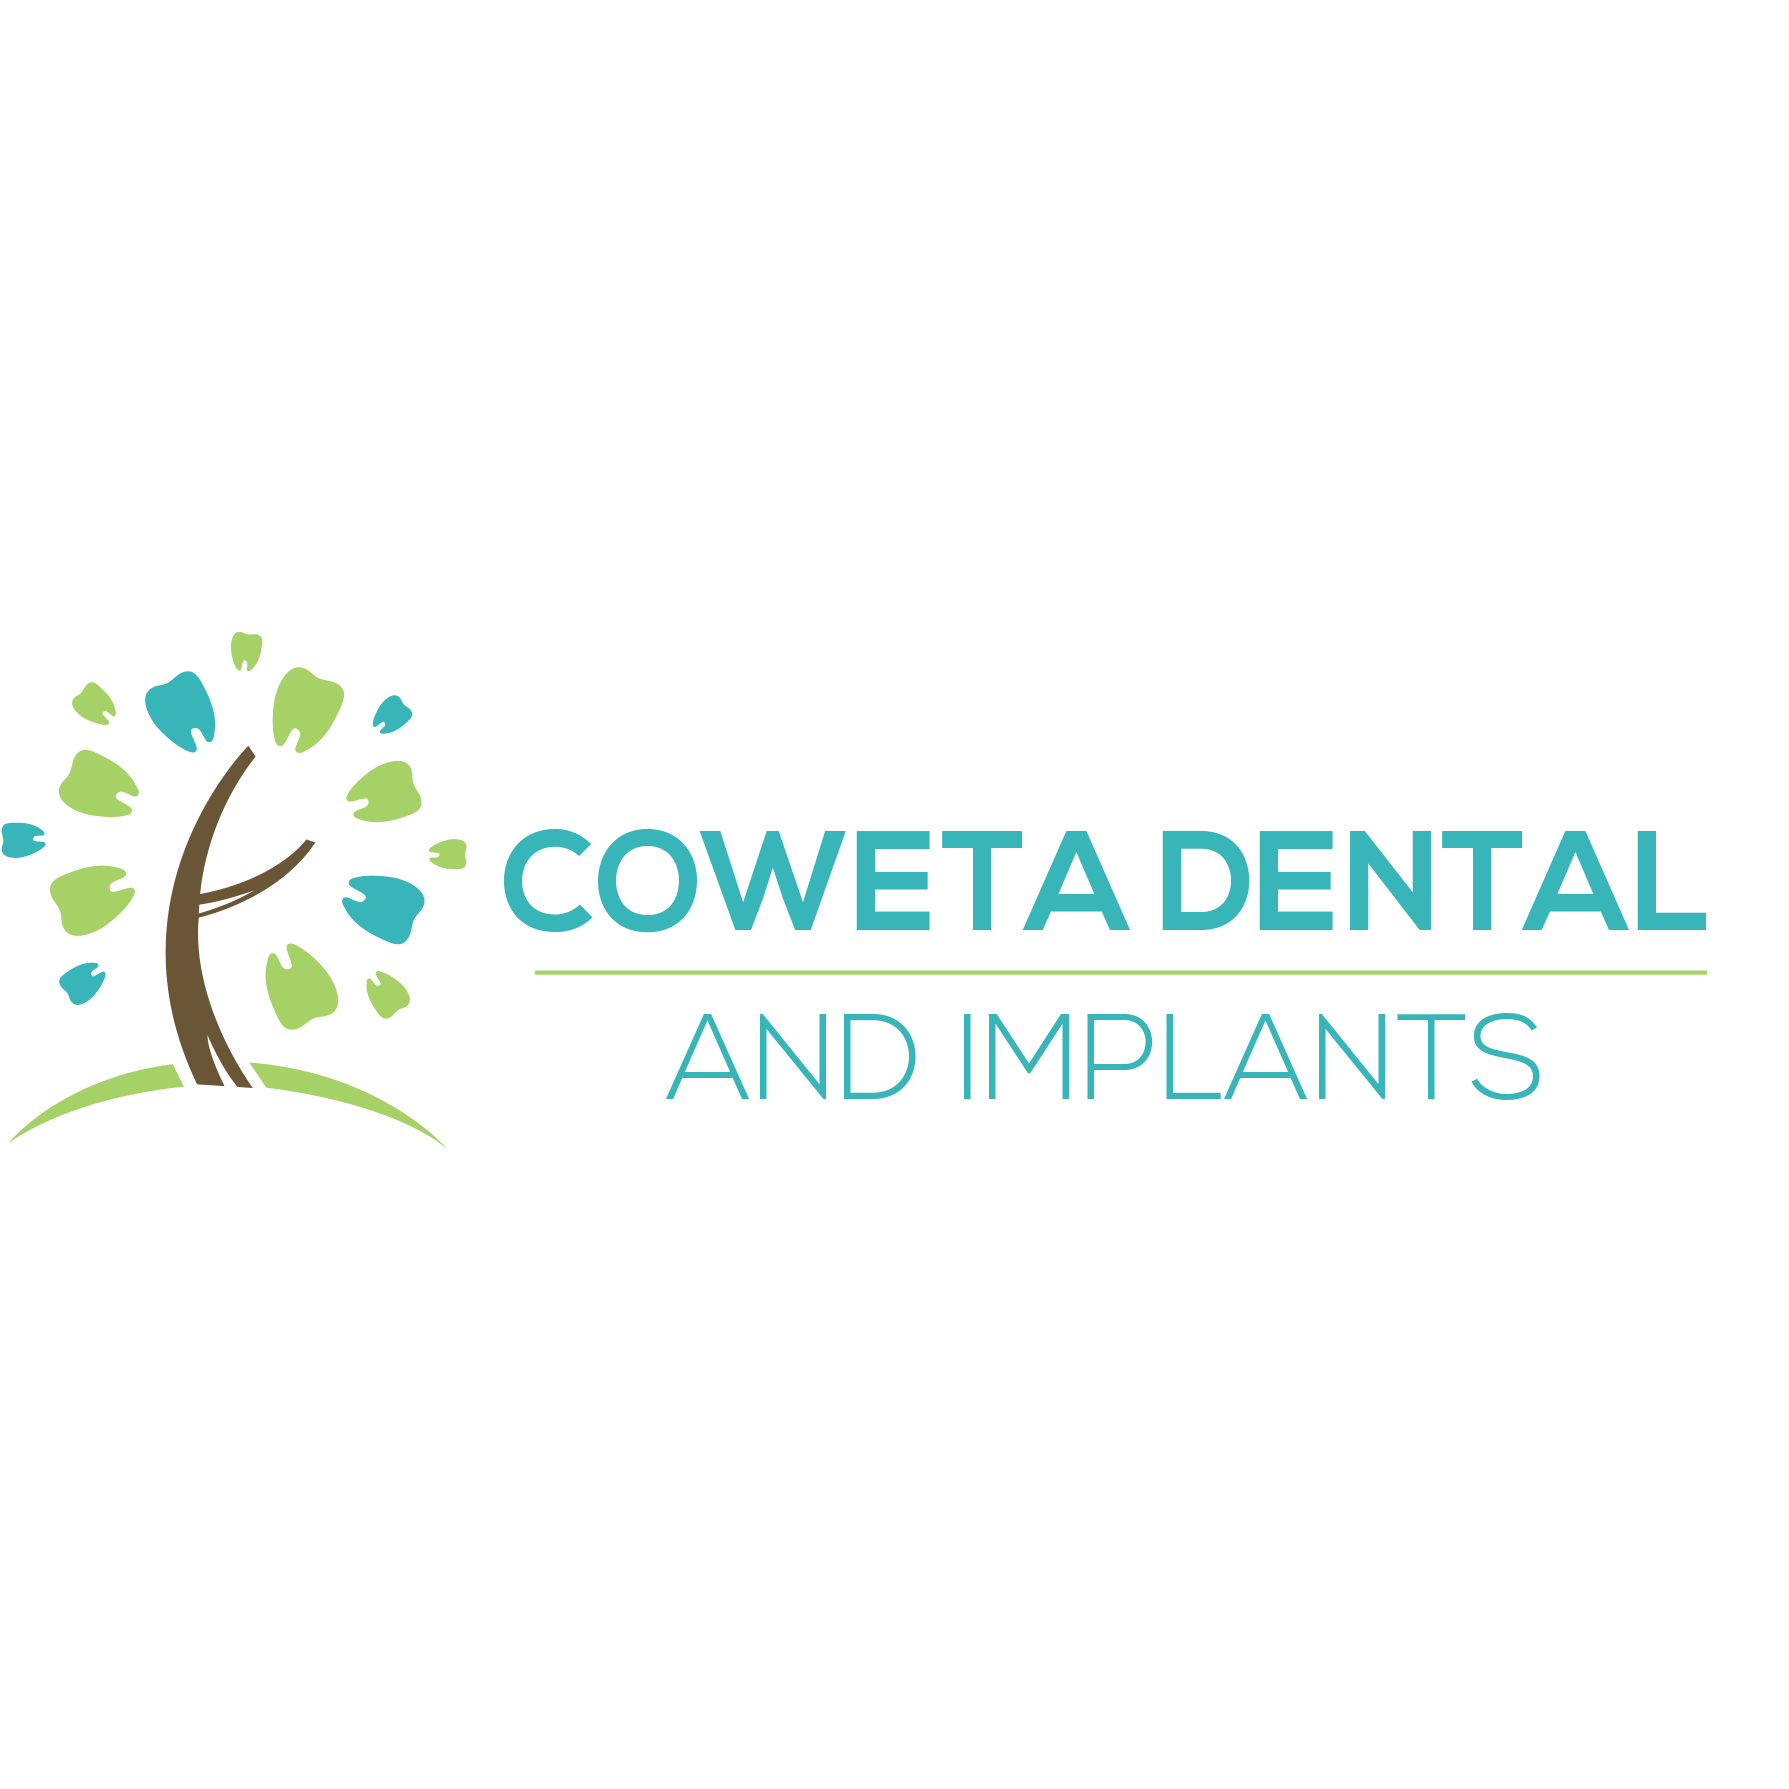 Coweta Dental and Implants